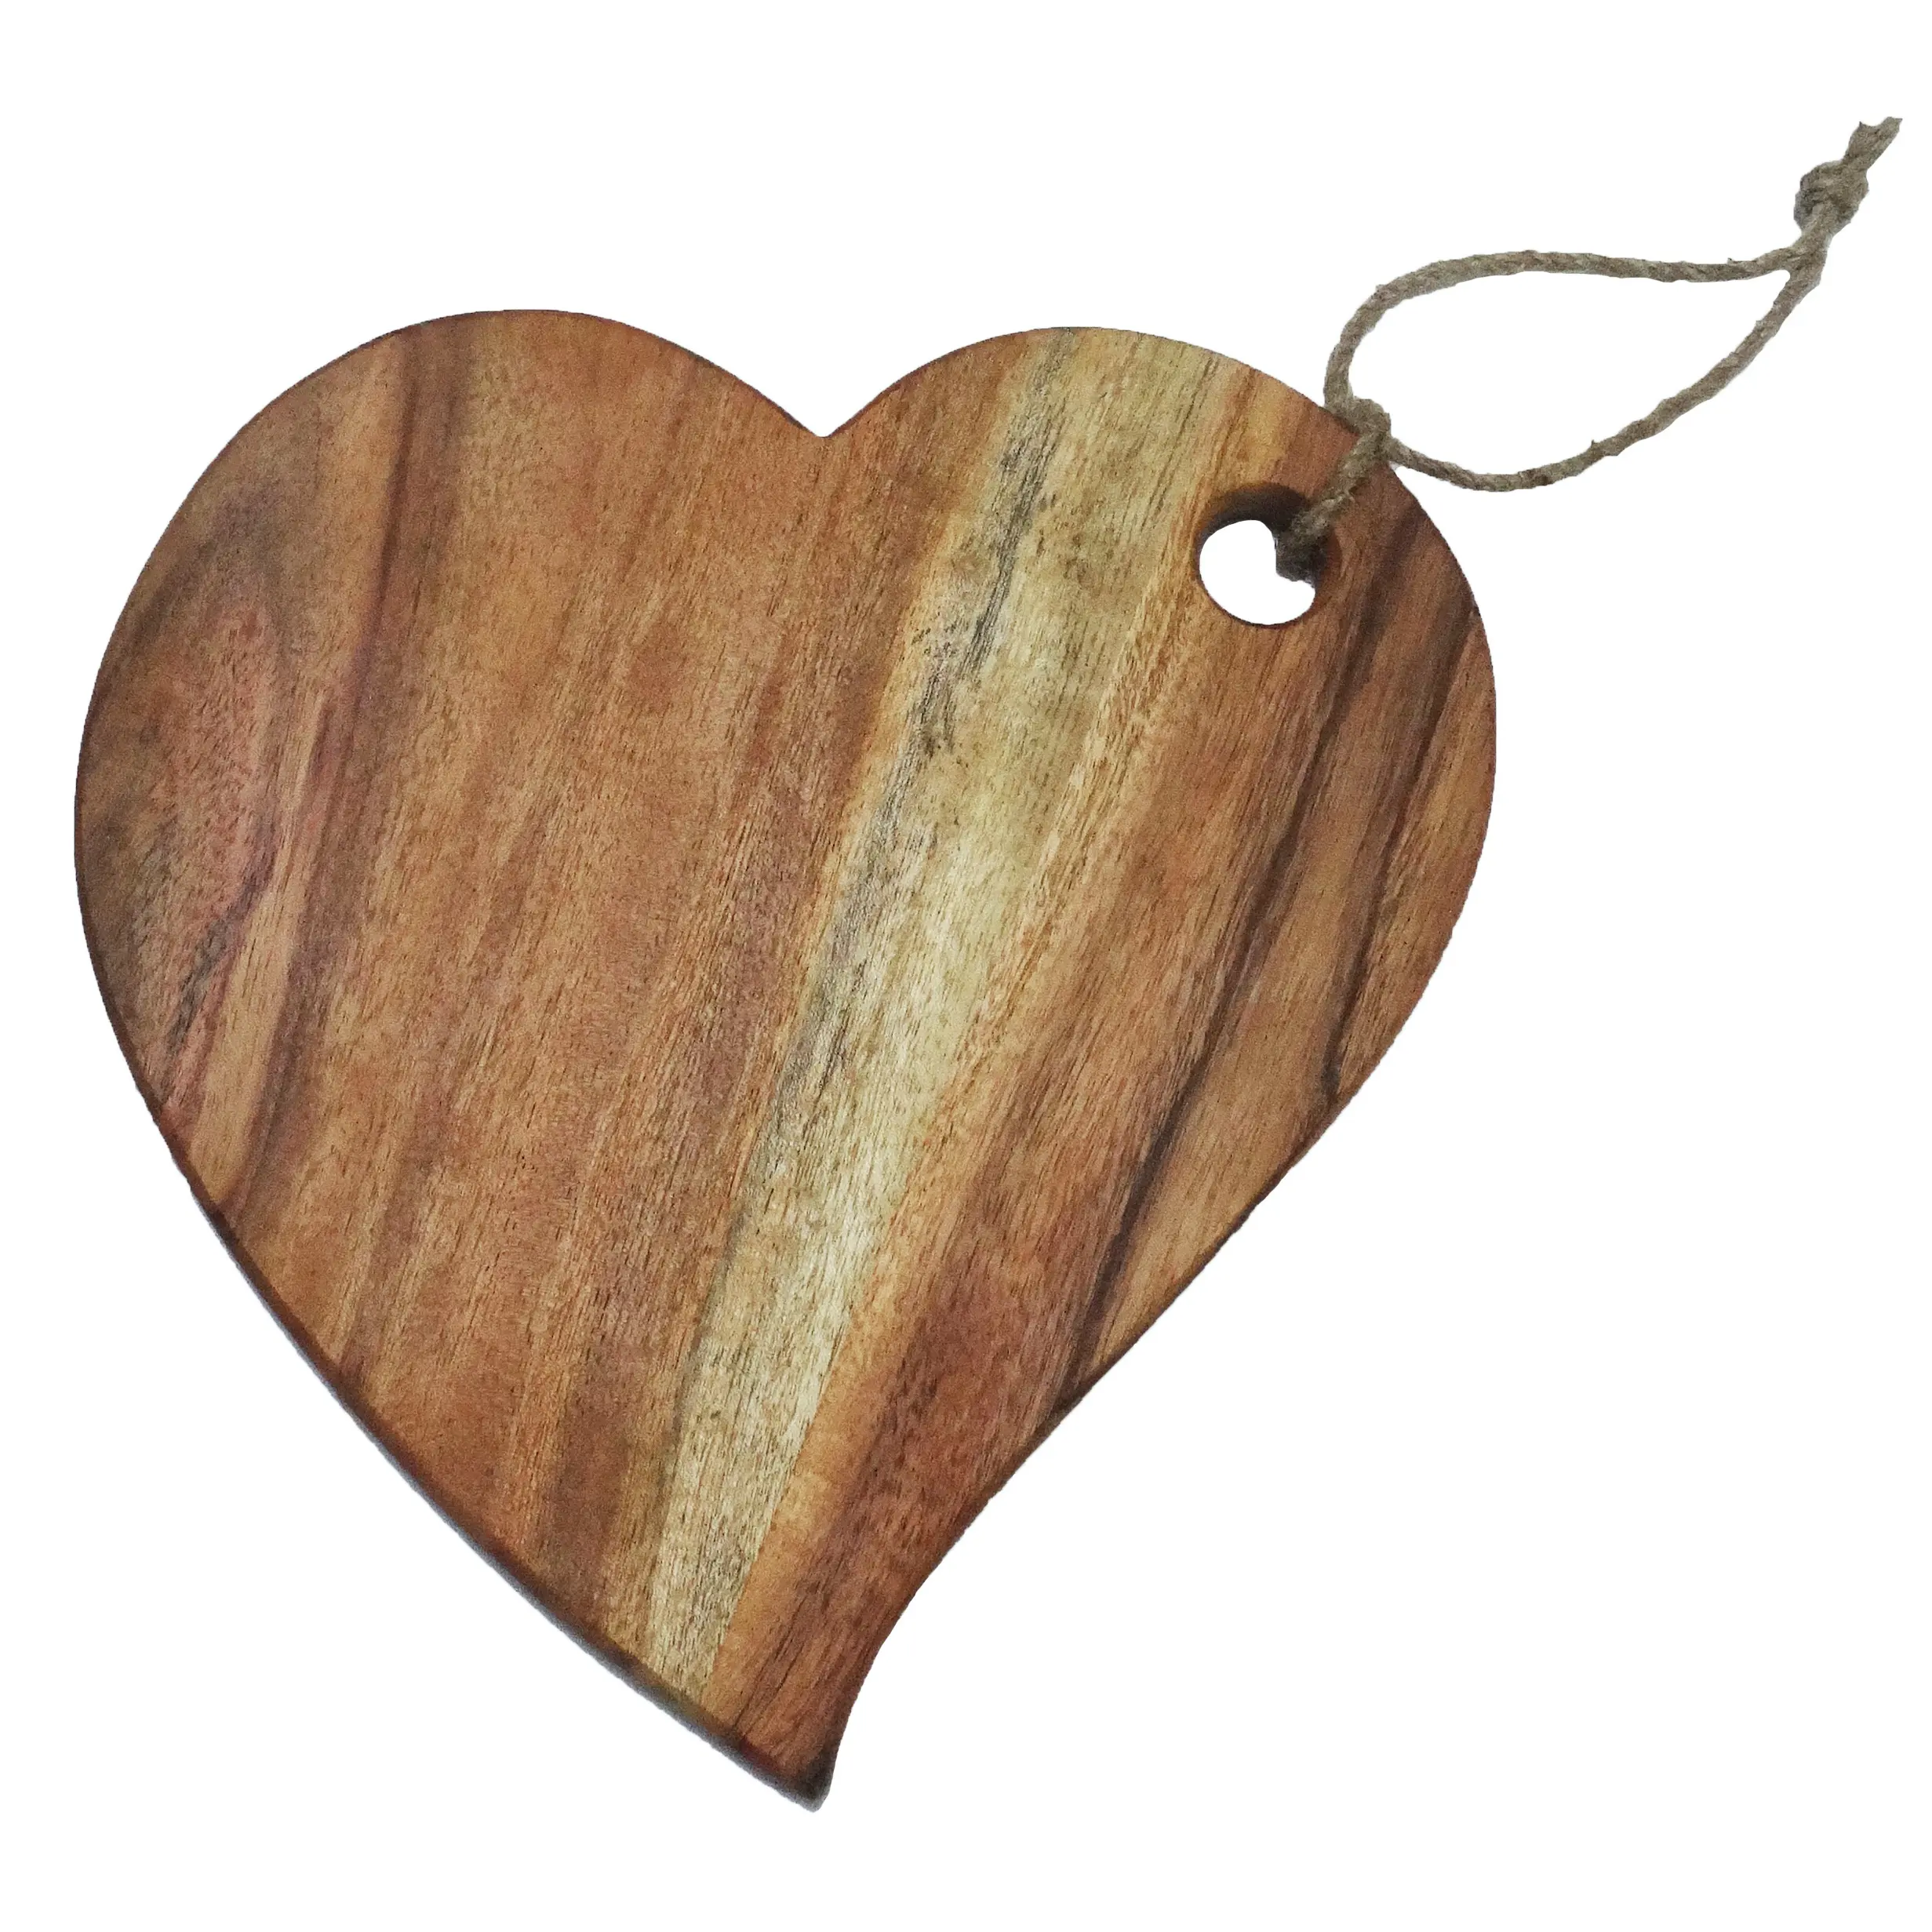 Oiled Finish Acacia Heart Shape Cutting Board for Sale Cutting Board Handcrafted Big Size Heart Shape Wooden Chopping Board